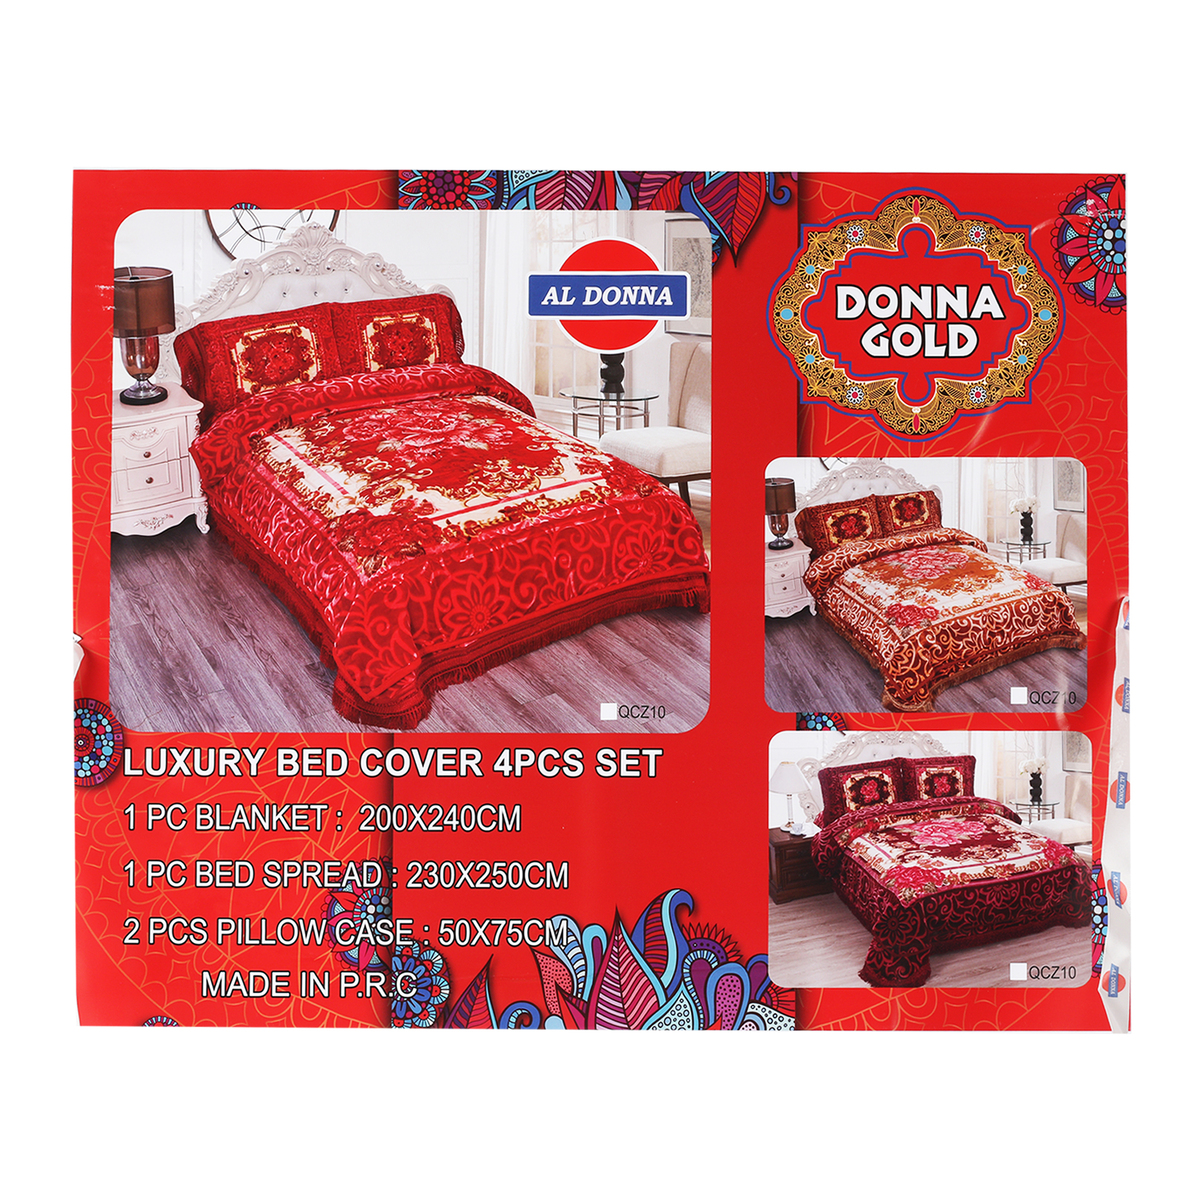 Donna Gold CloudySilky Blanket 200x240cm Assorted Color & Design